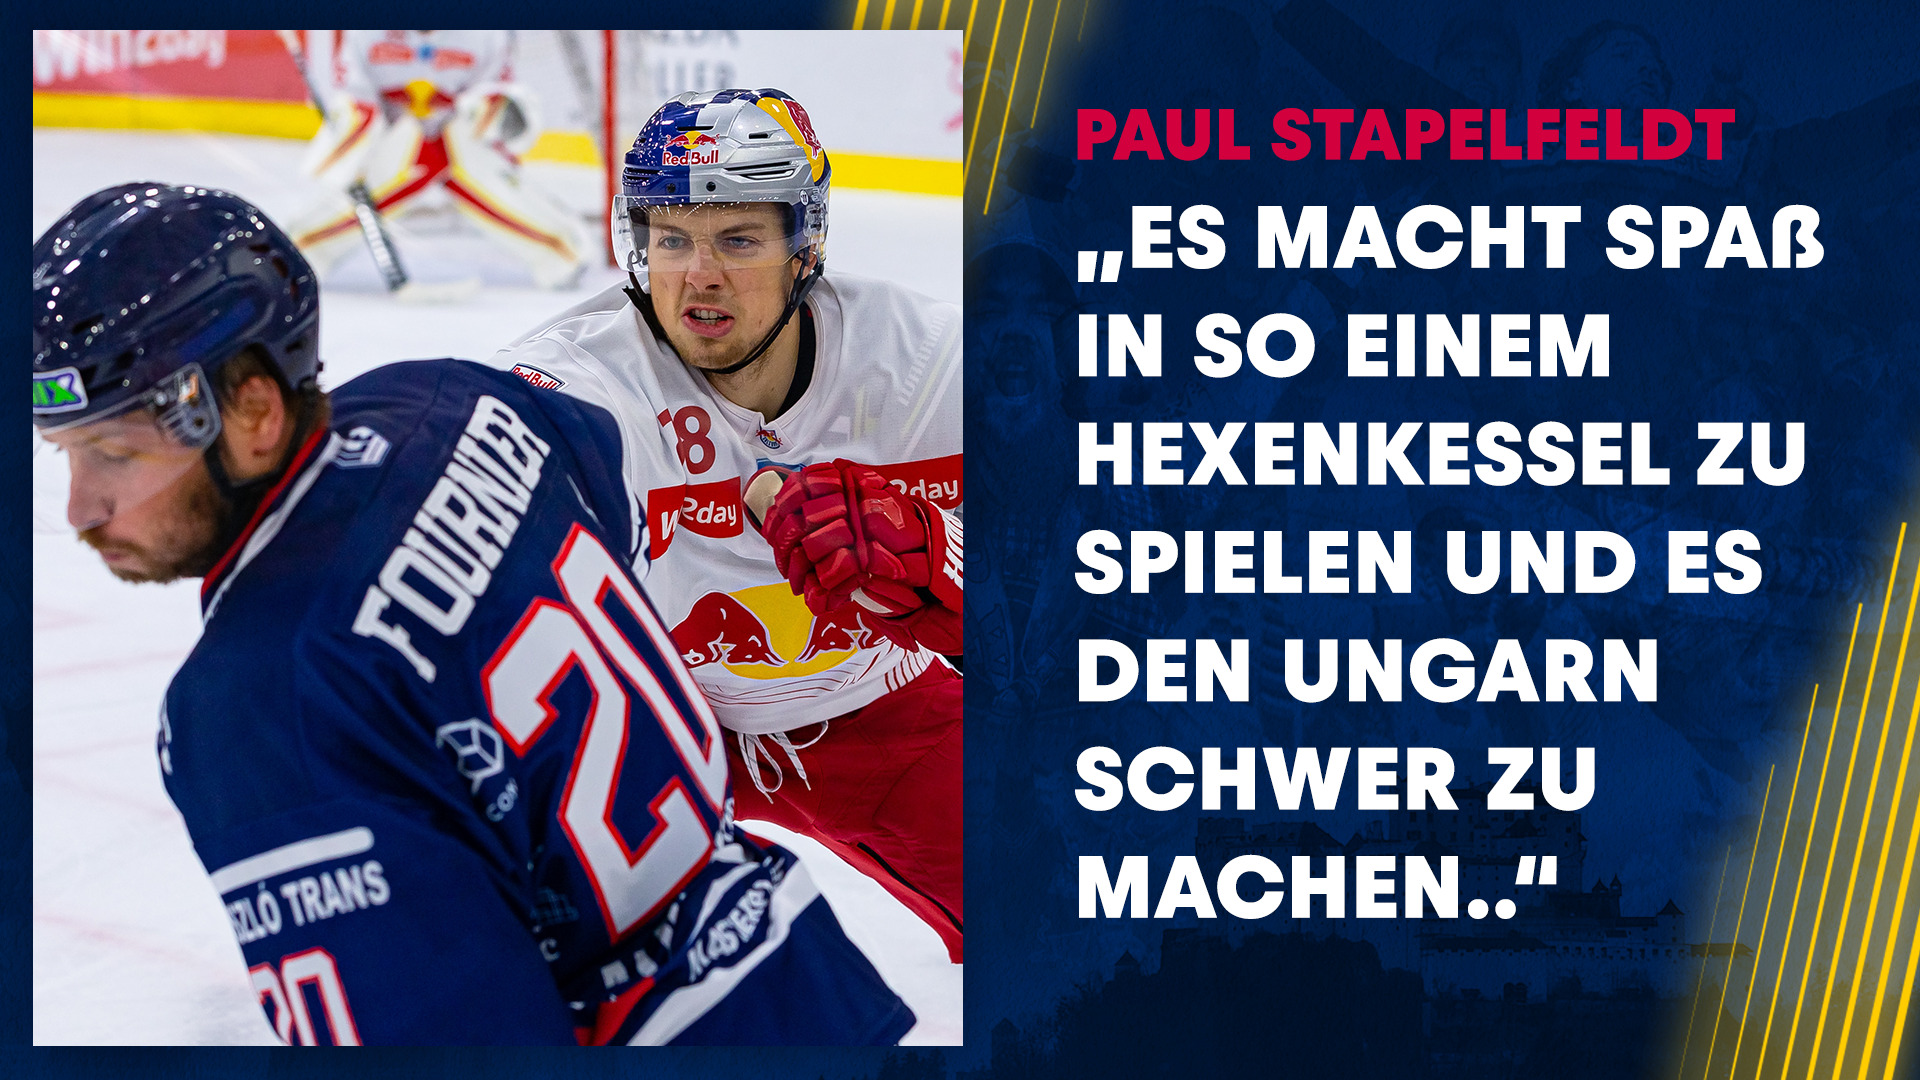 Statement: Paul Stapelfeldt